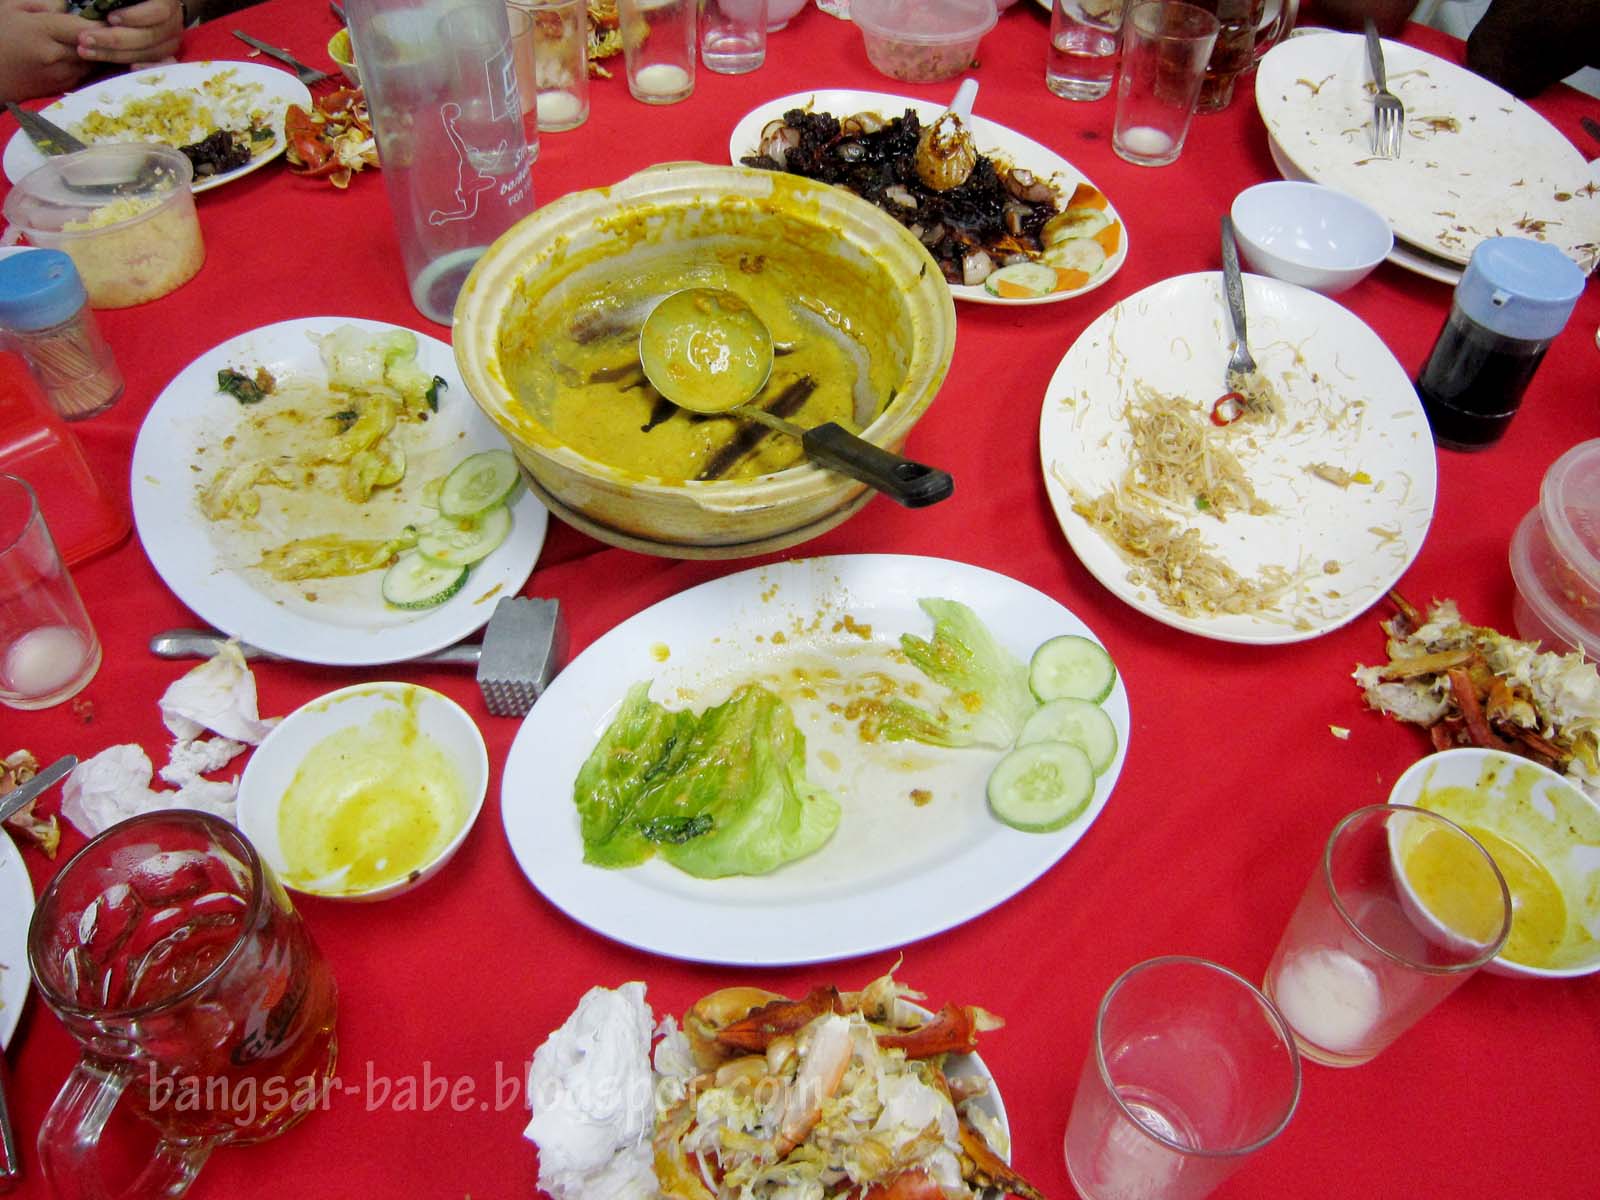 Shah Alam Seafood Restaurant - Umpama r